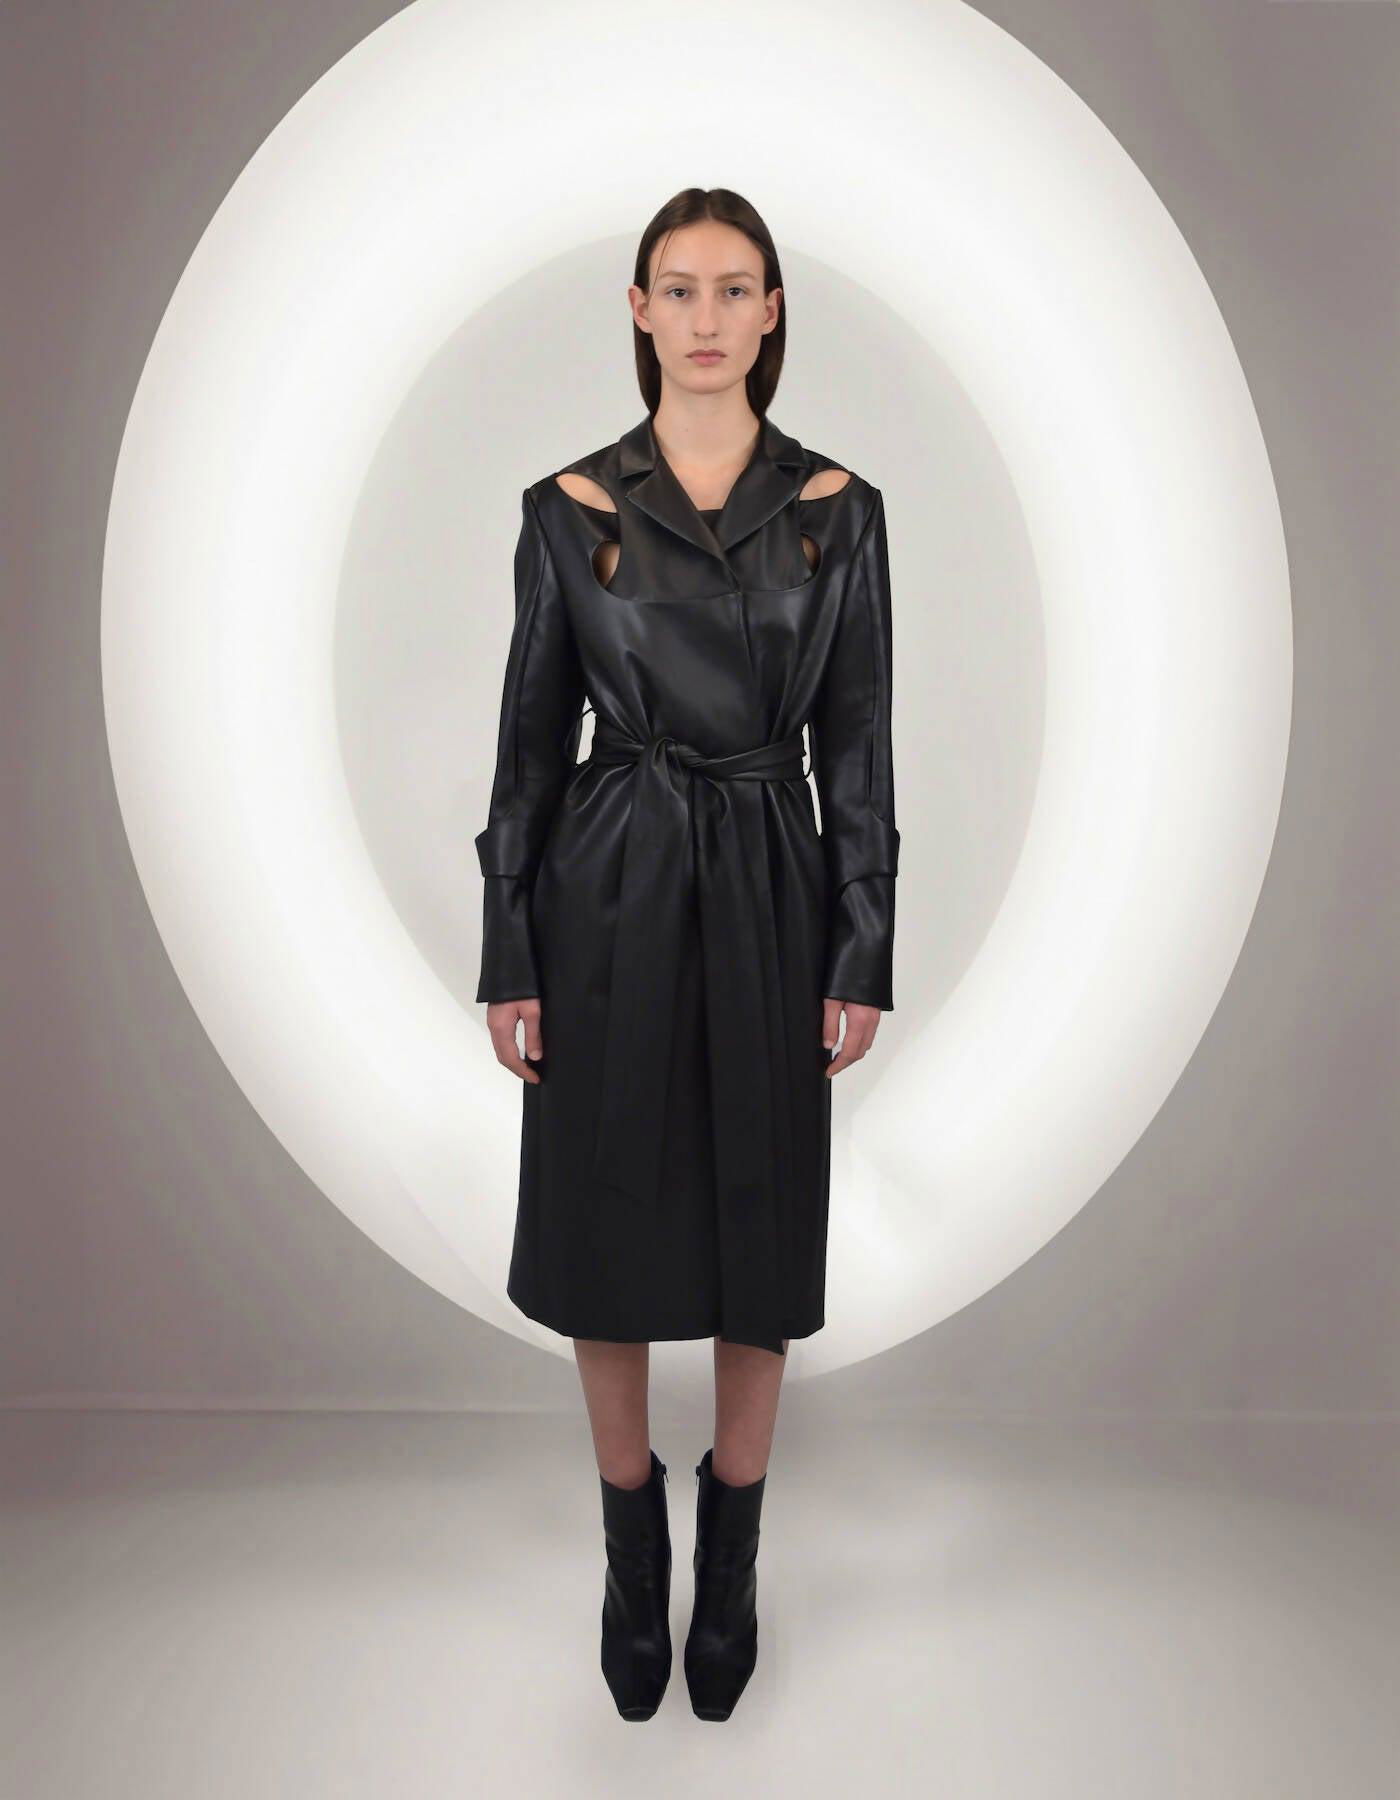 Mire Black Vegan Leather Coat by MAET STUDIO